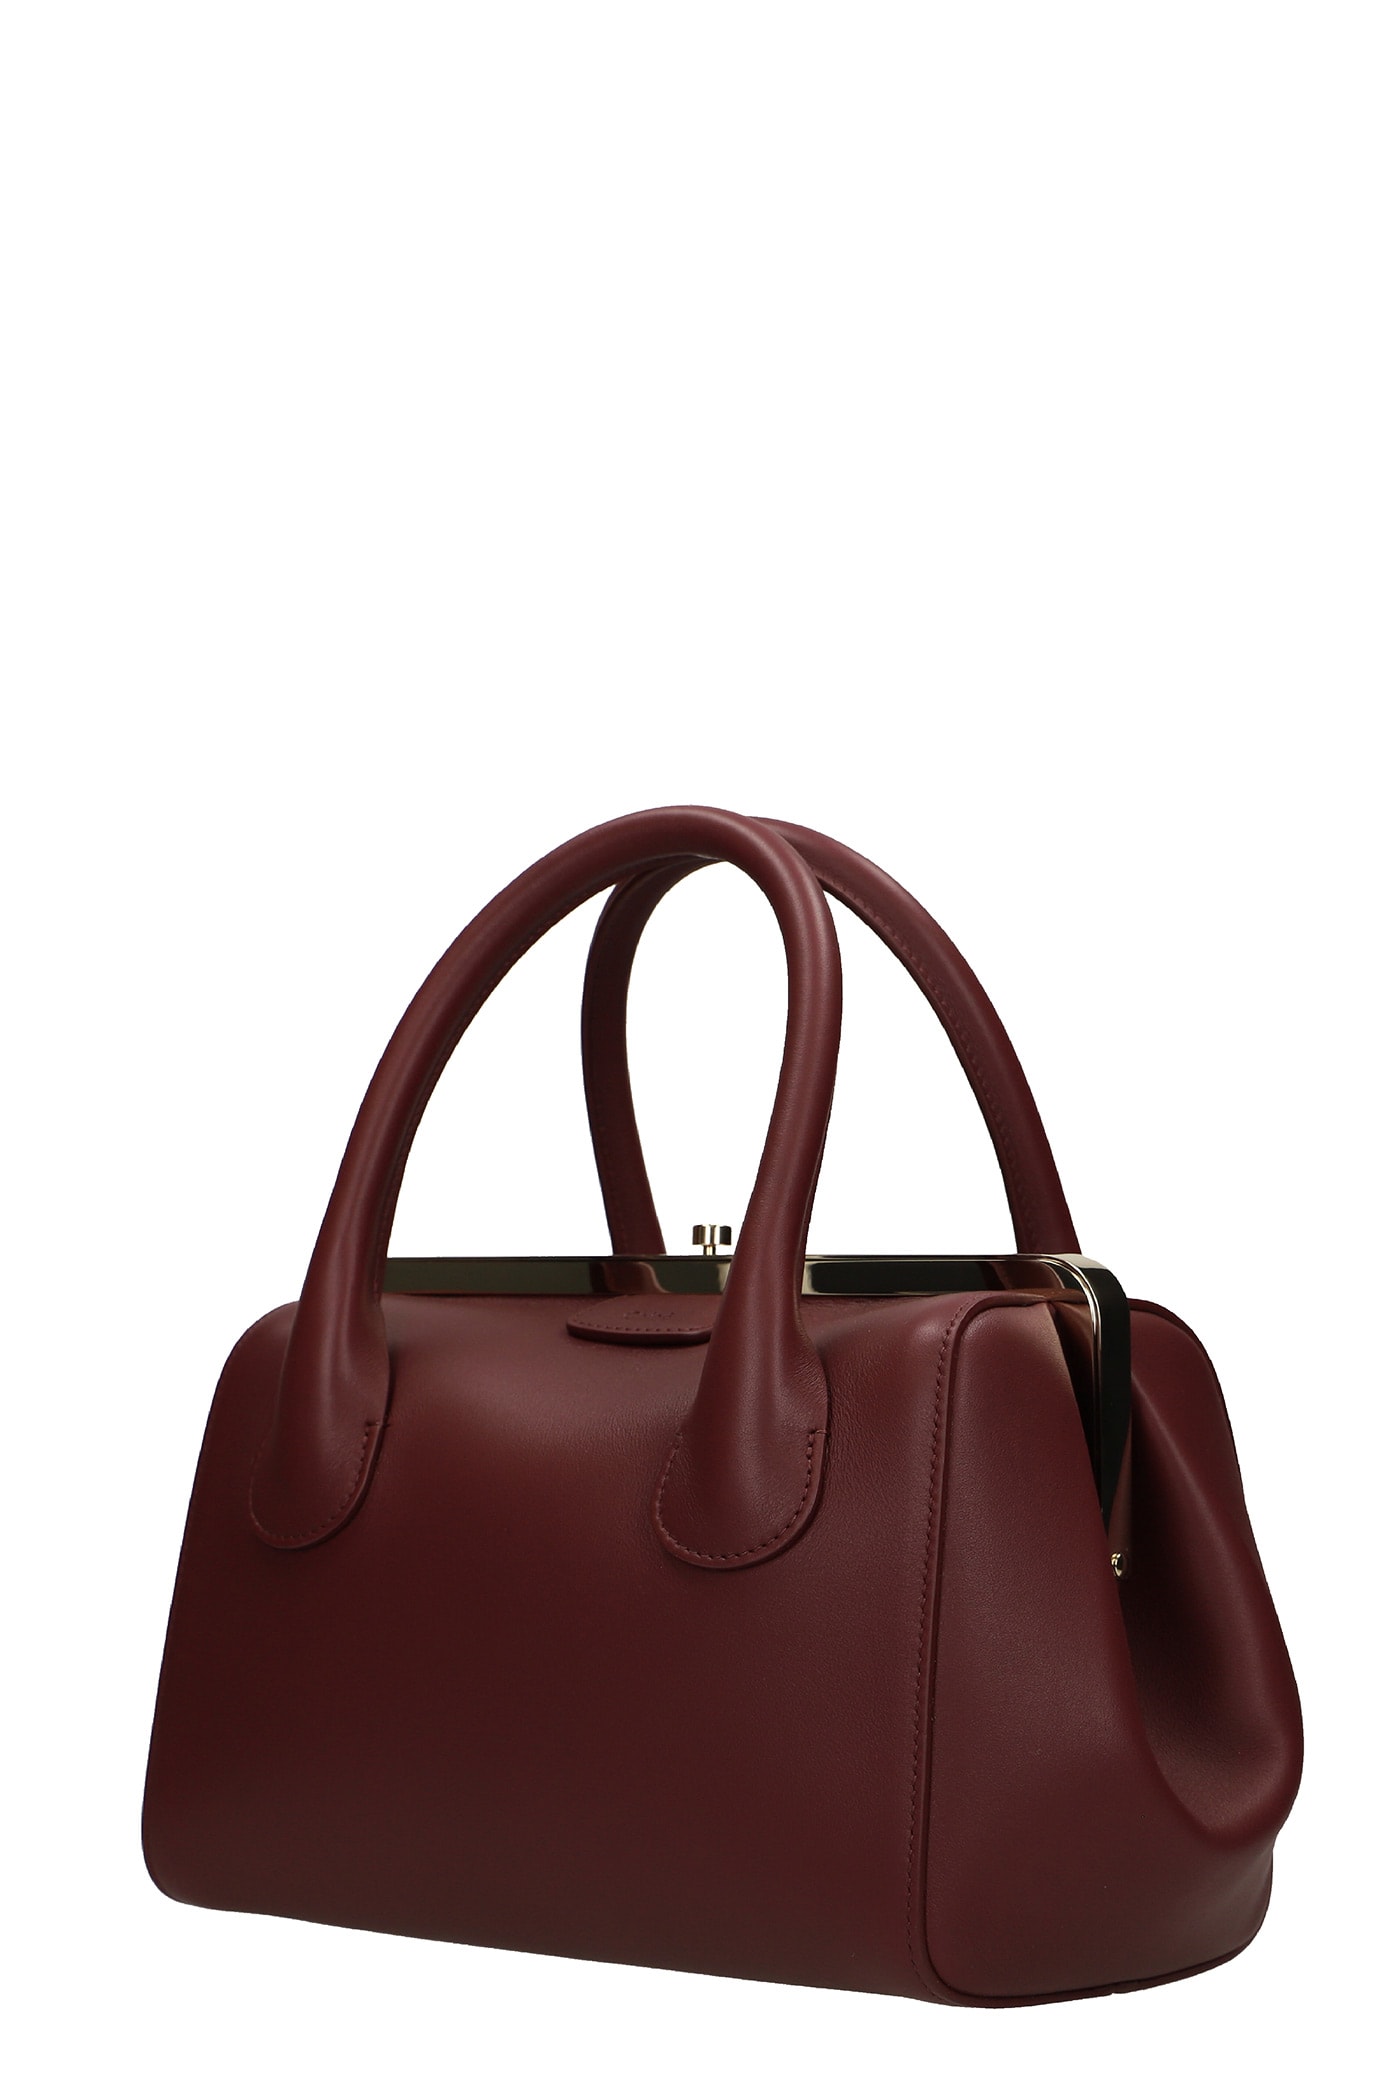 Chloé Joyce Hand Bag In Bordeaux Leather | ModeSens